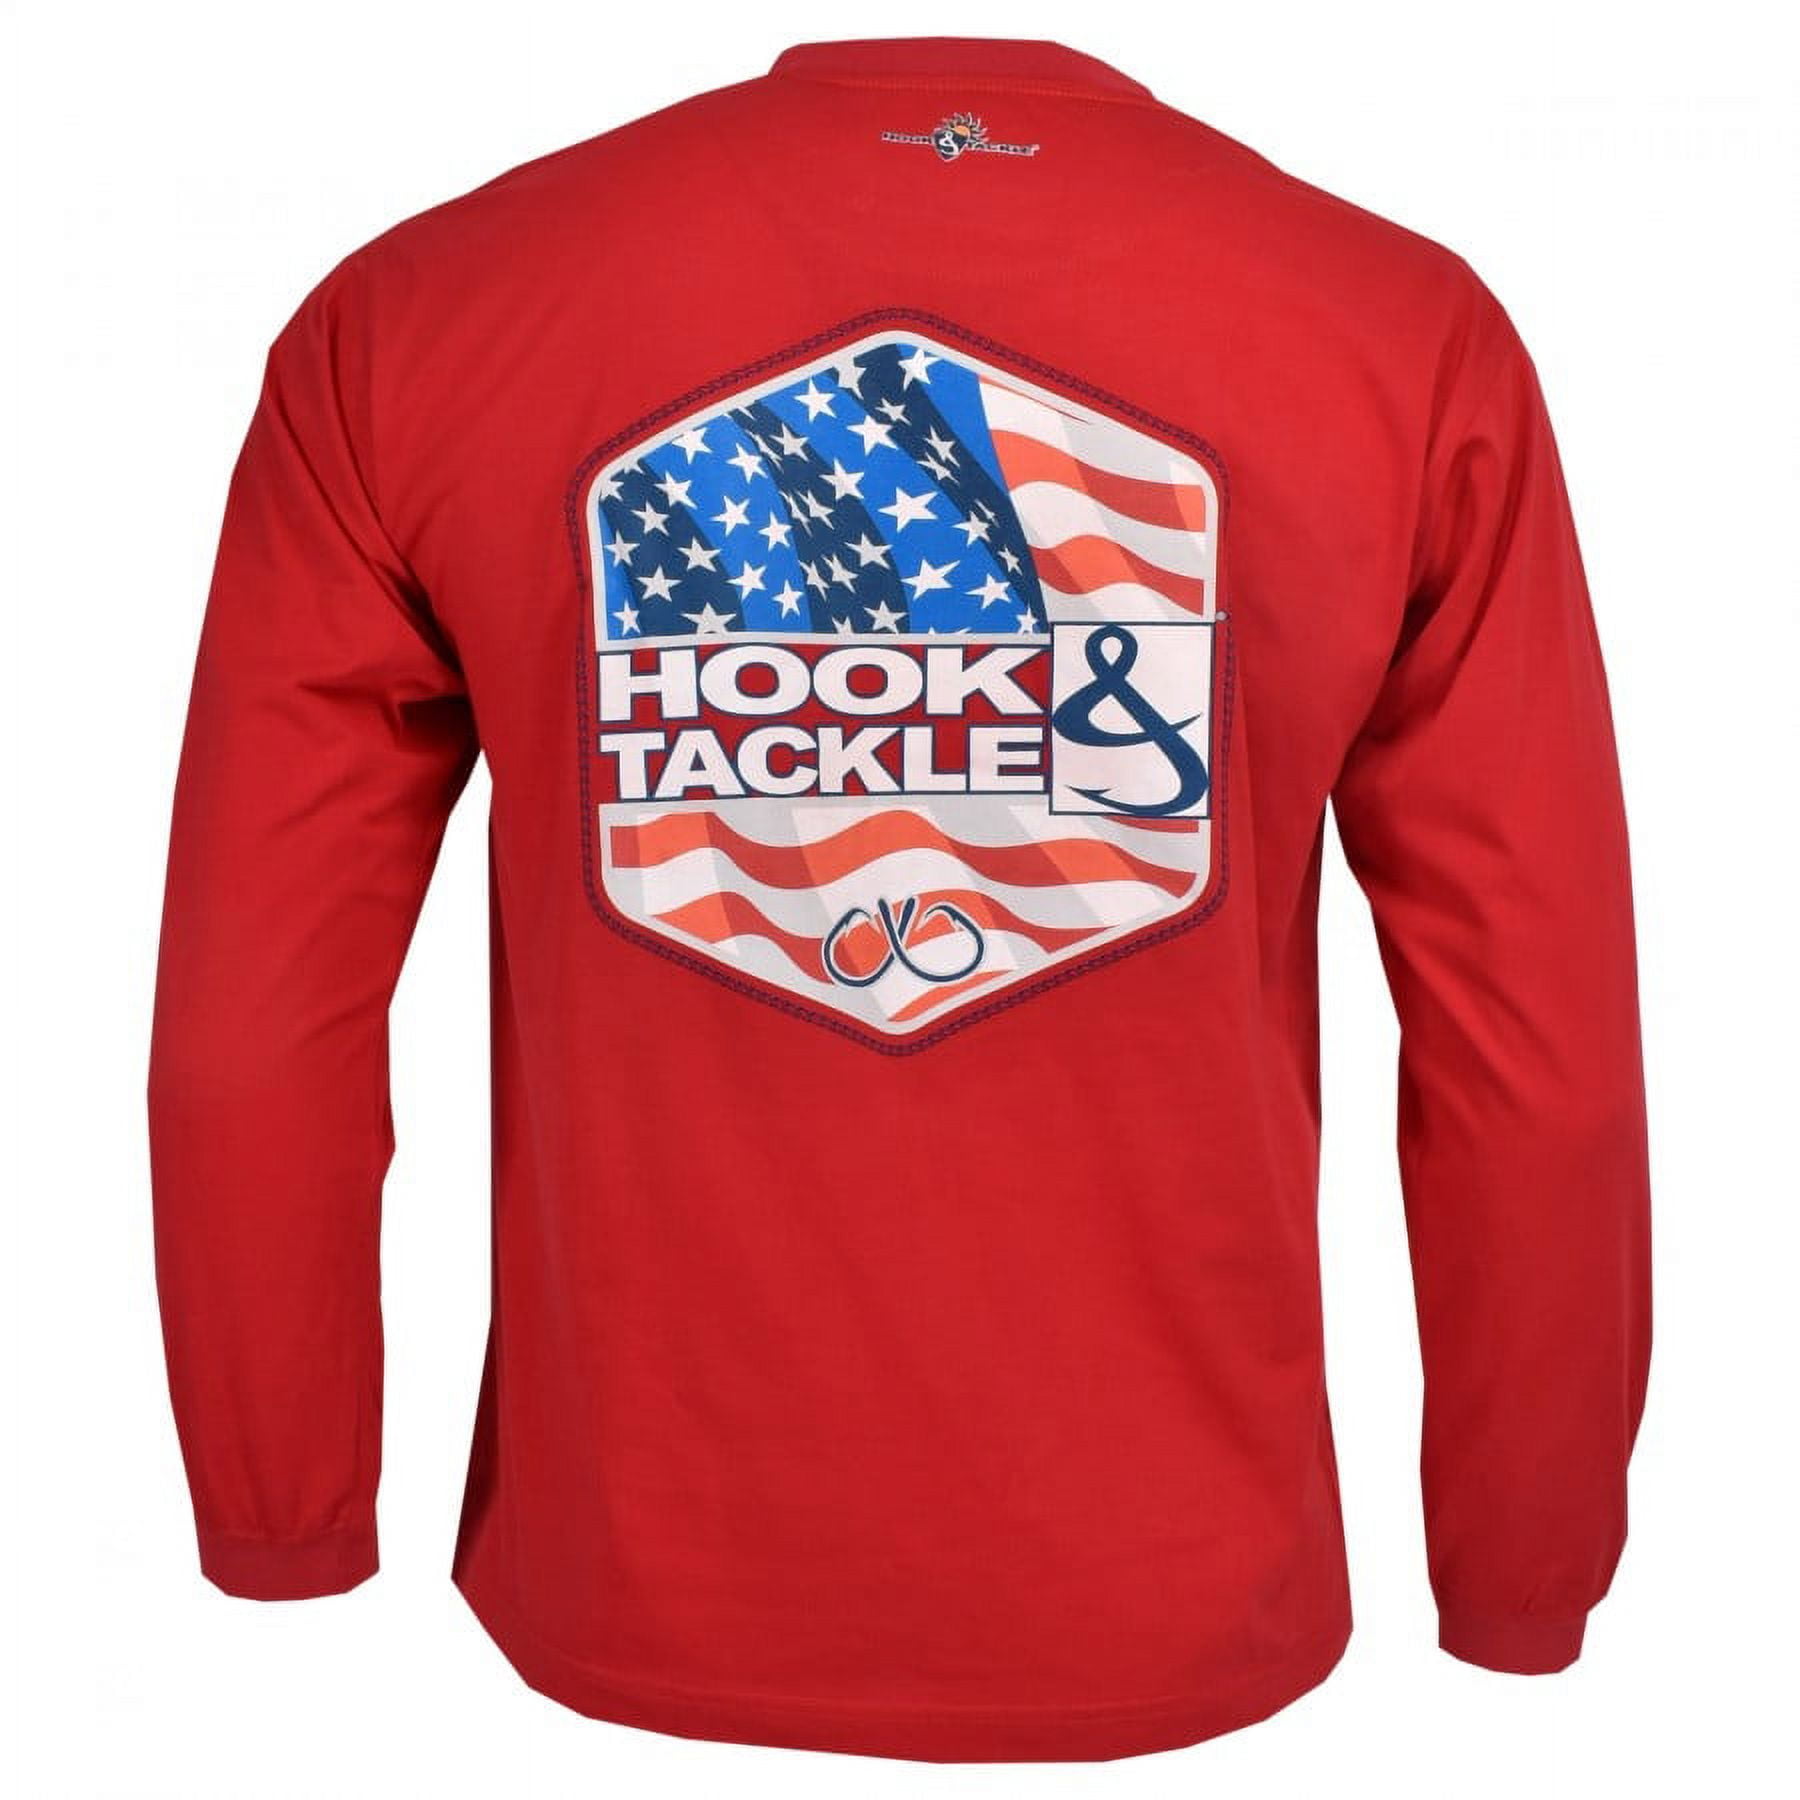 Hook & Tackle Men's Star Spangled Long Sleeve Fishing T-Shirt